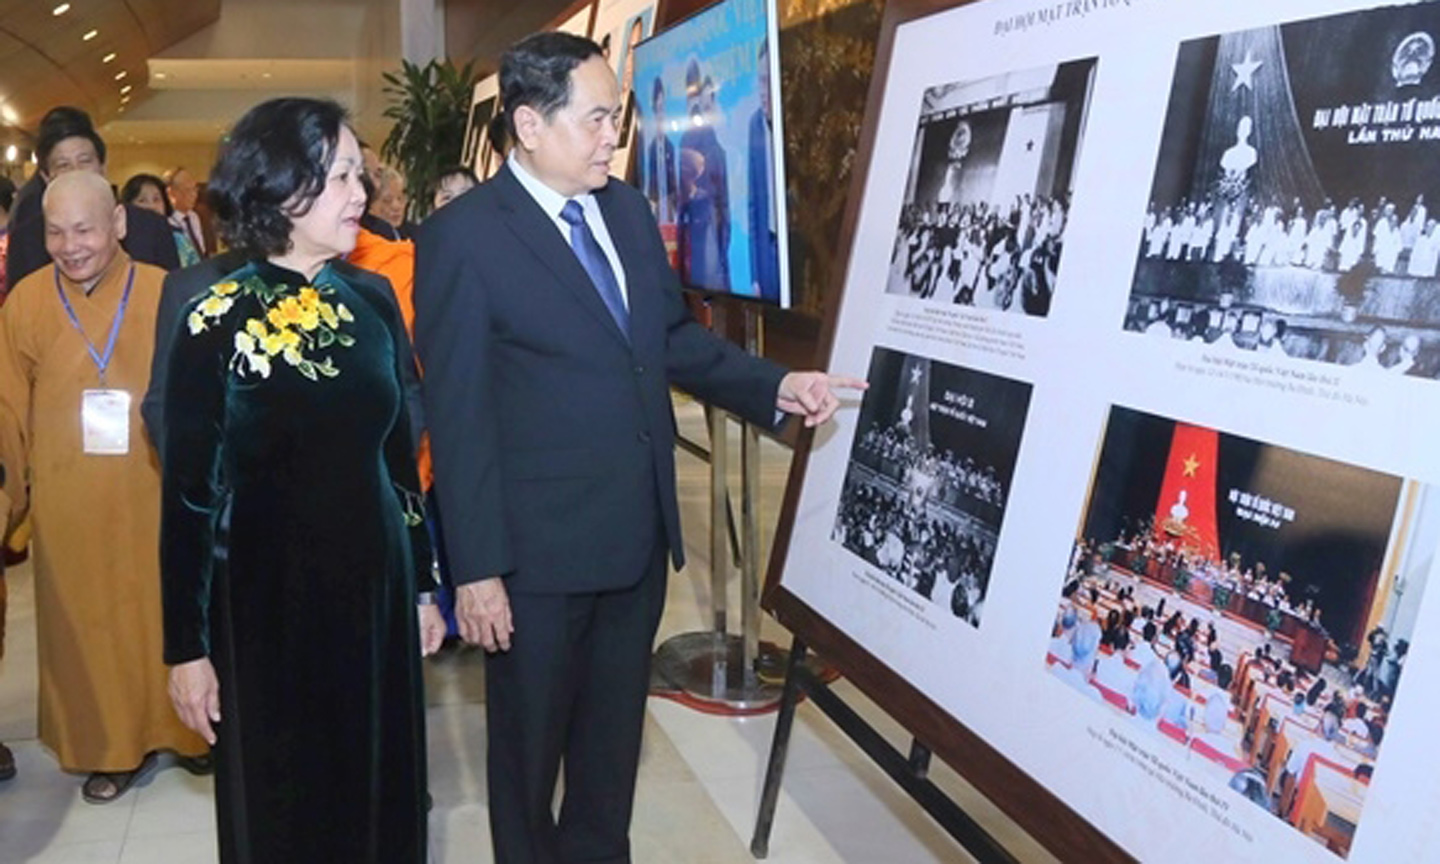  Delegates admiring photos on display at the exhibition (Photo: VGP)